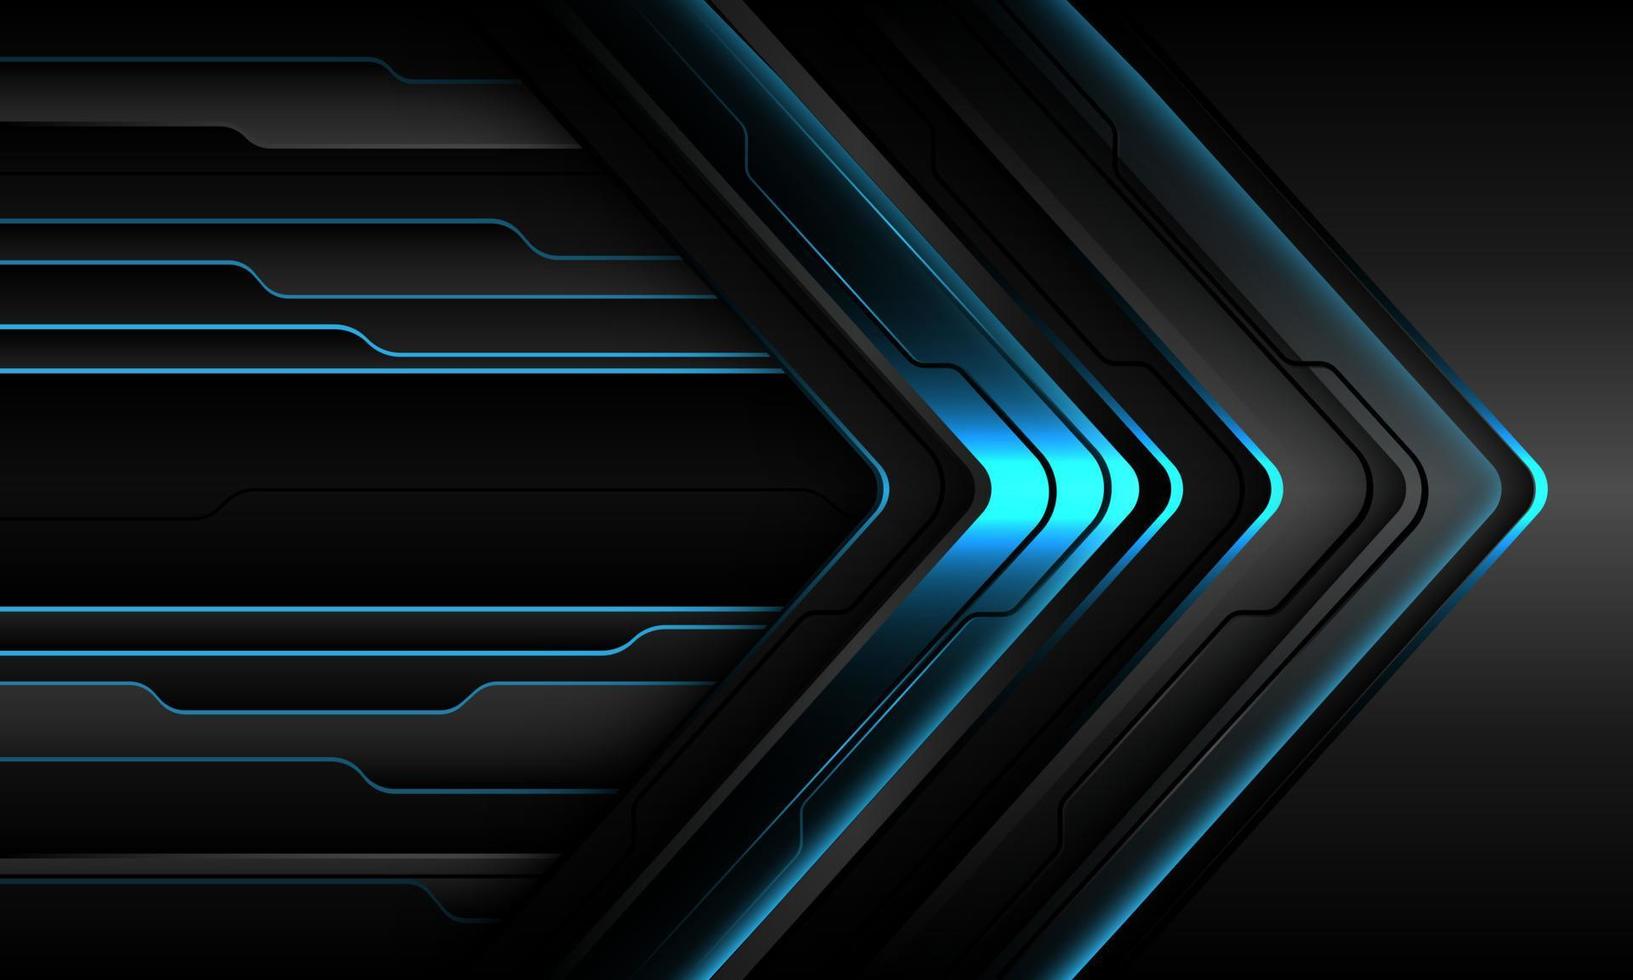 abstract blauw grijs zwart cyber pijl richting meetkundig laag overlappen ontwerp modern futuristische technologie achtergrond vector